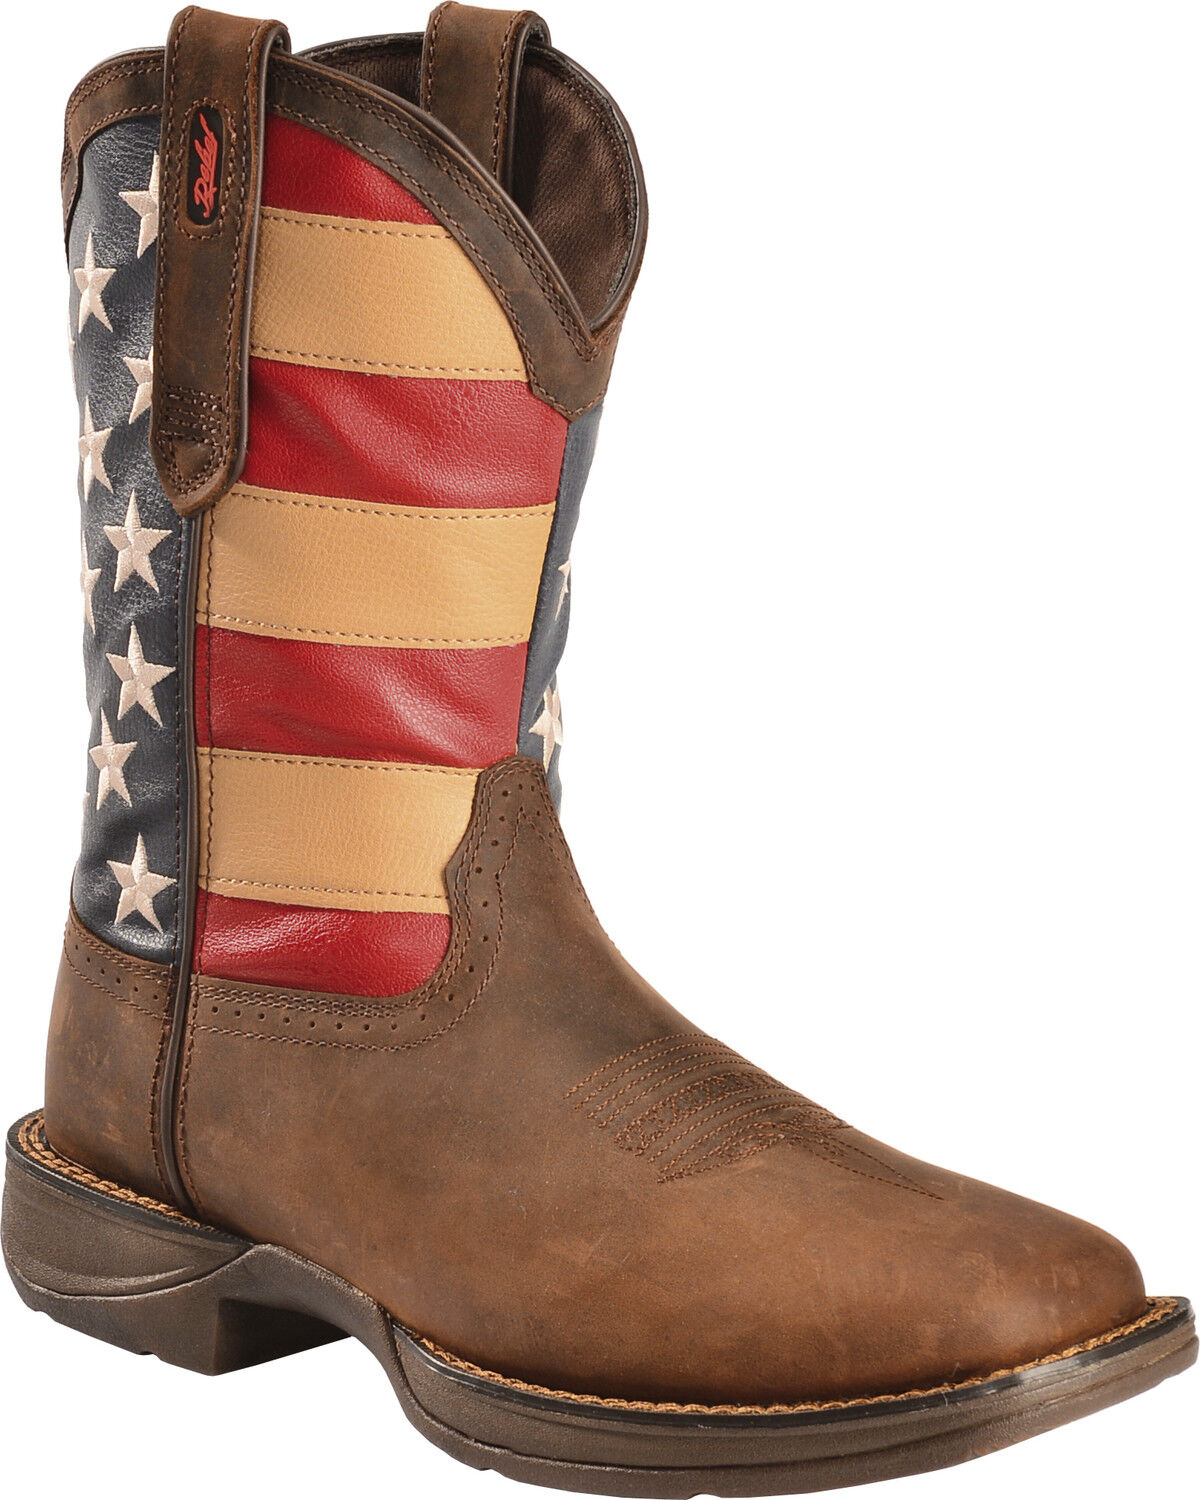 Men's Patriotic Boots - Boot Barn